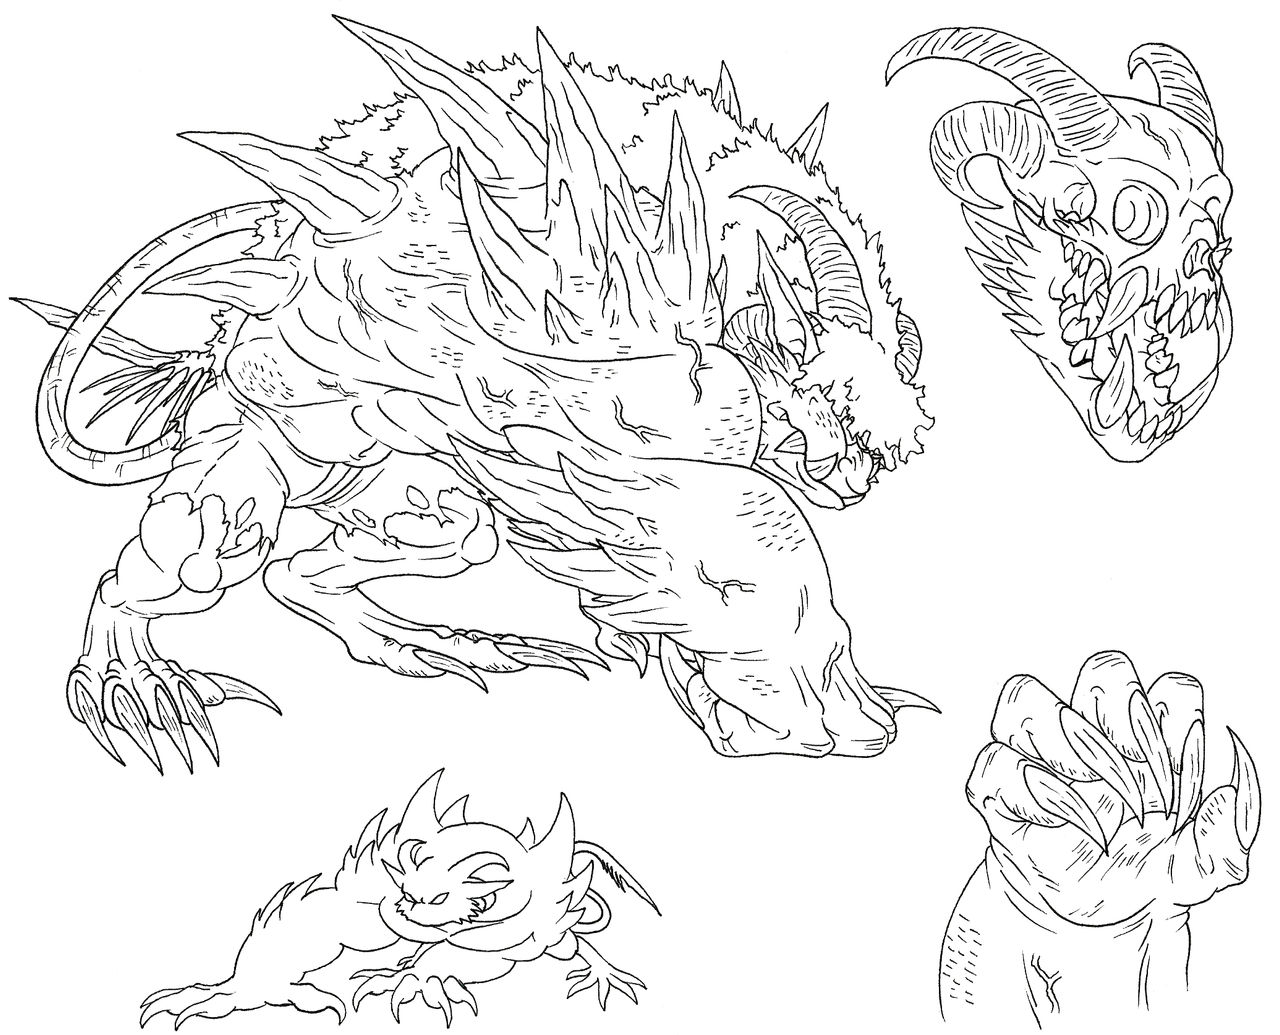 Monster design sketch by demongirl on